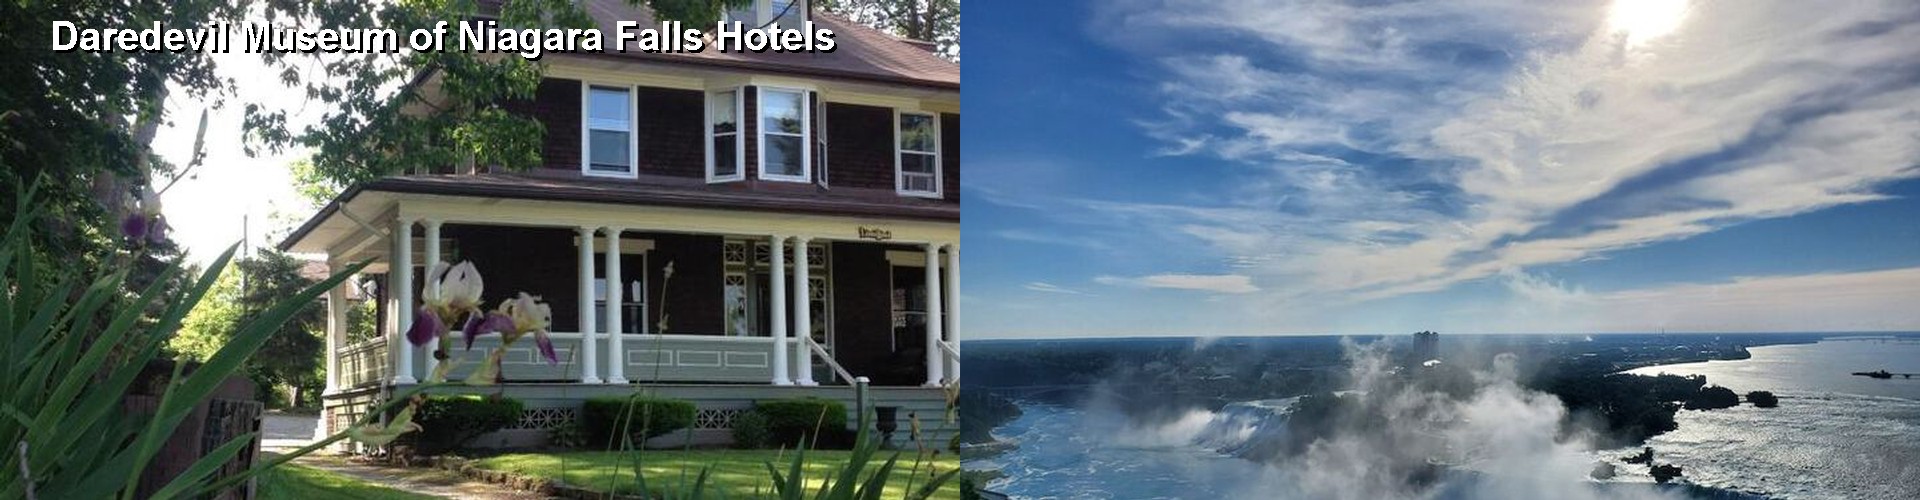 5 Best Hotels near Daredevil Museum of Niagara Falls